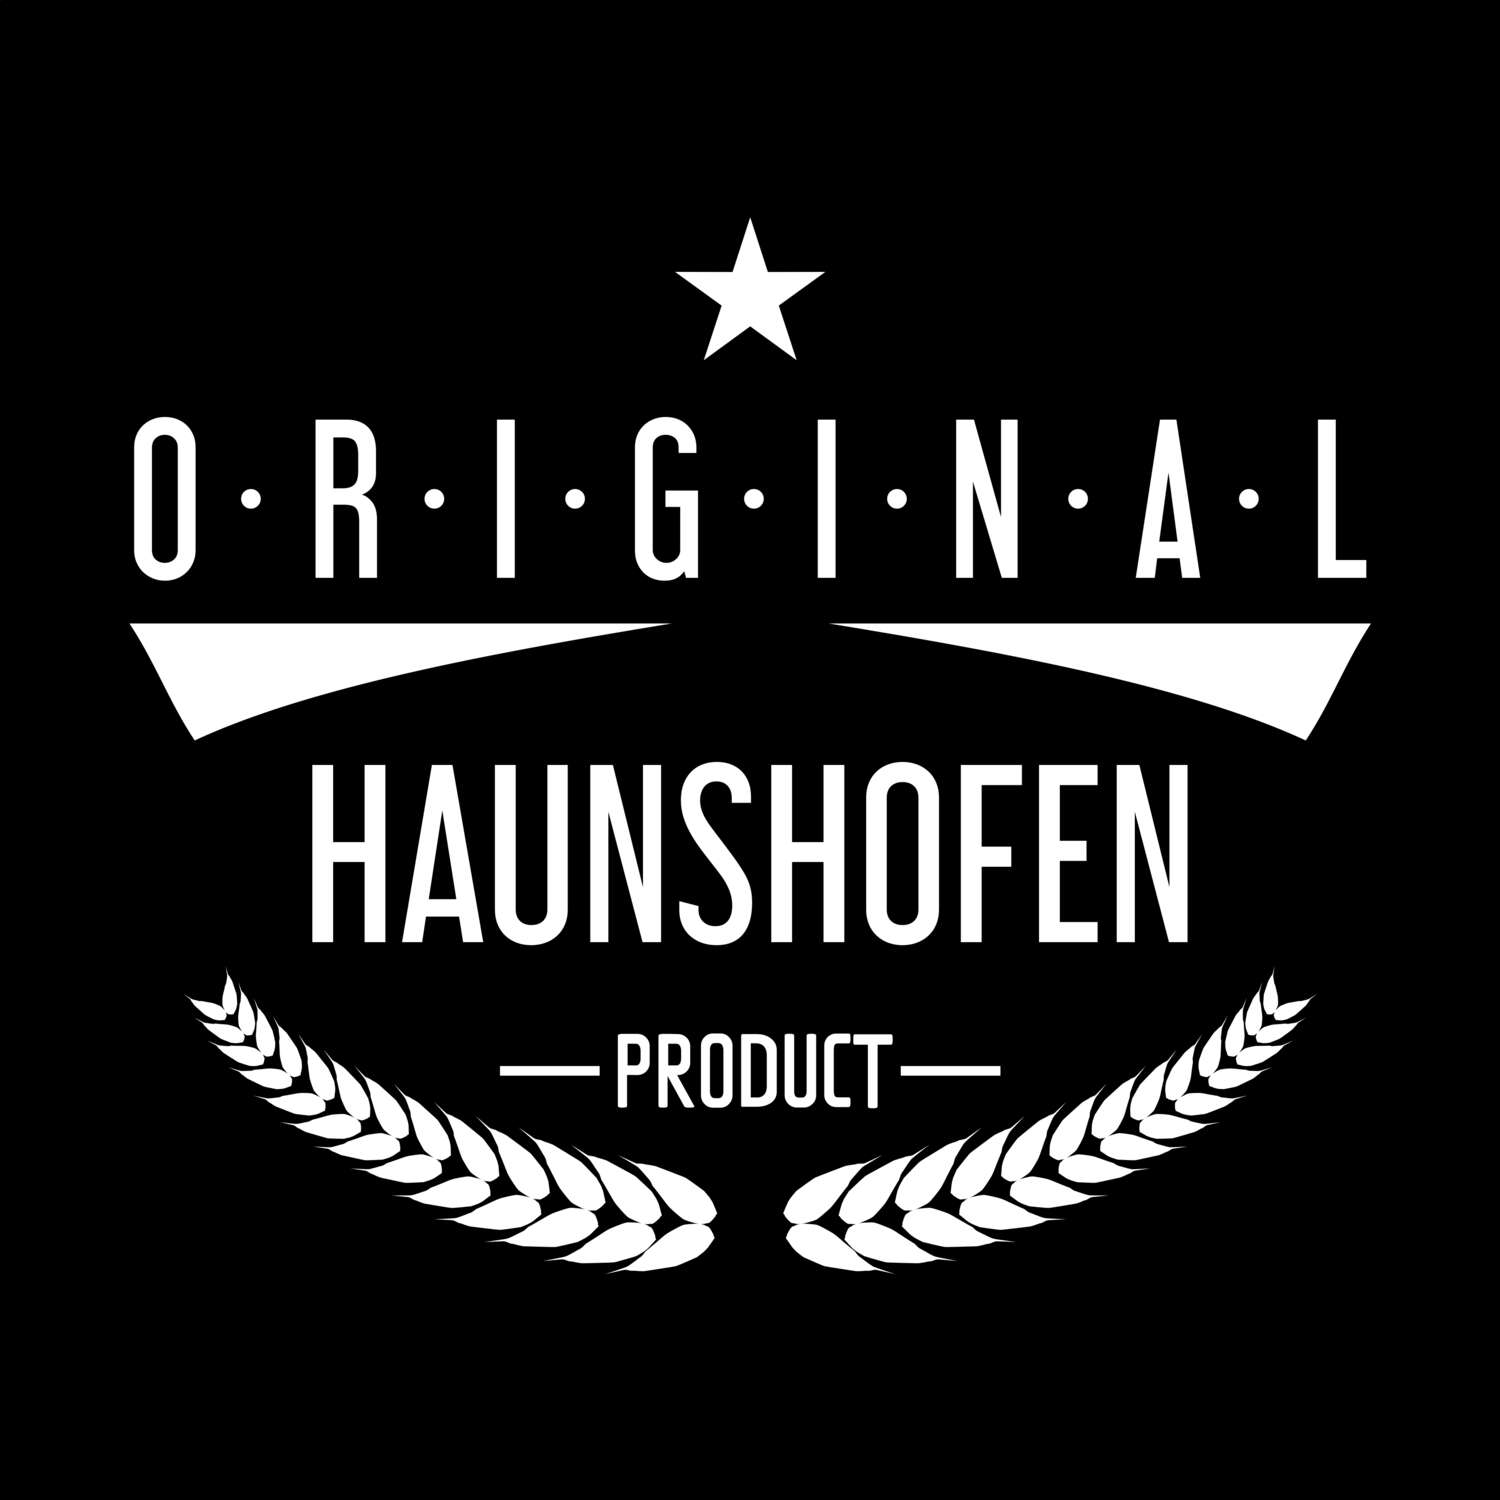 Haunshofen T-Shirt »Original Product«